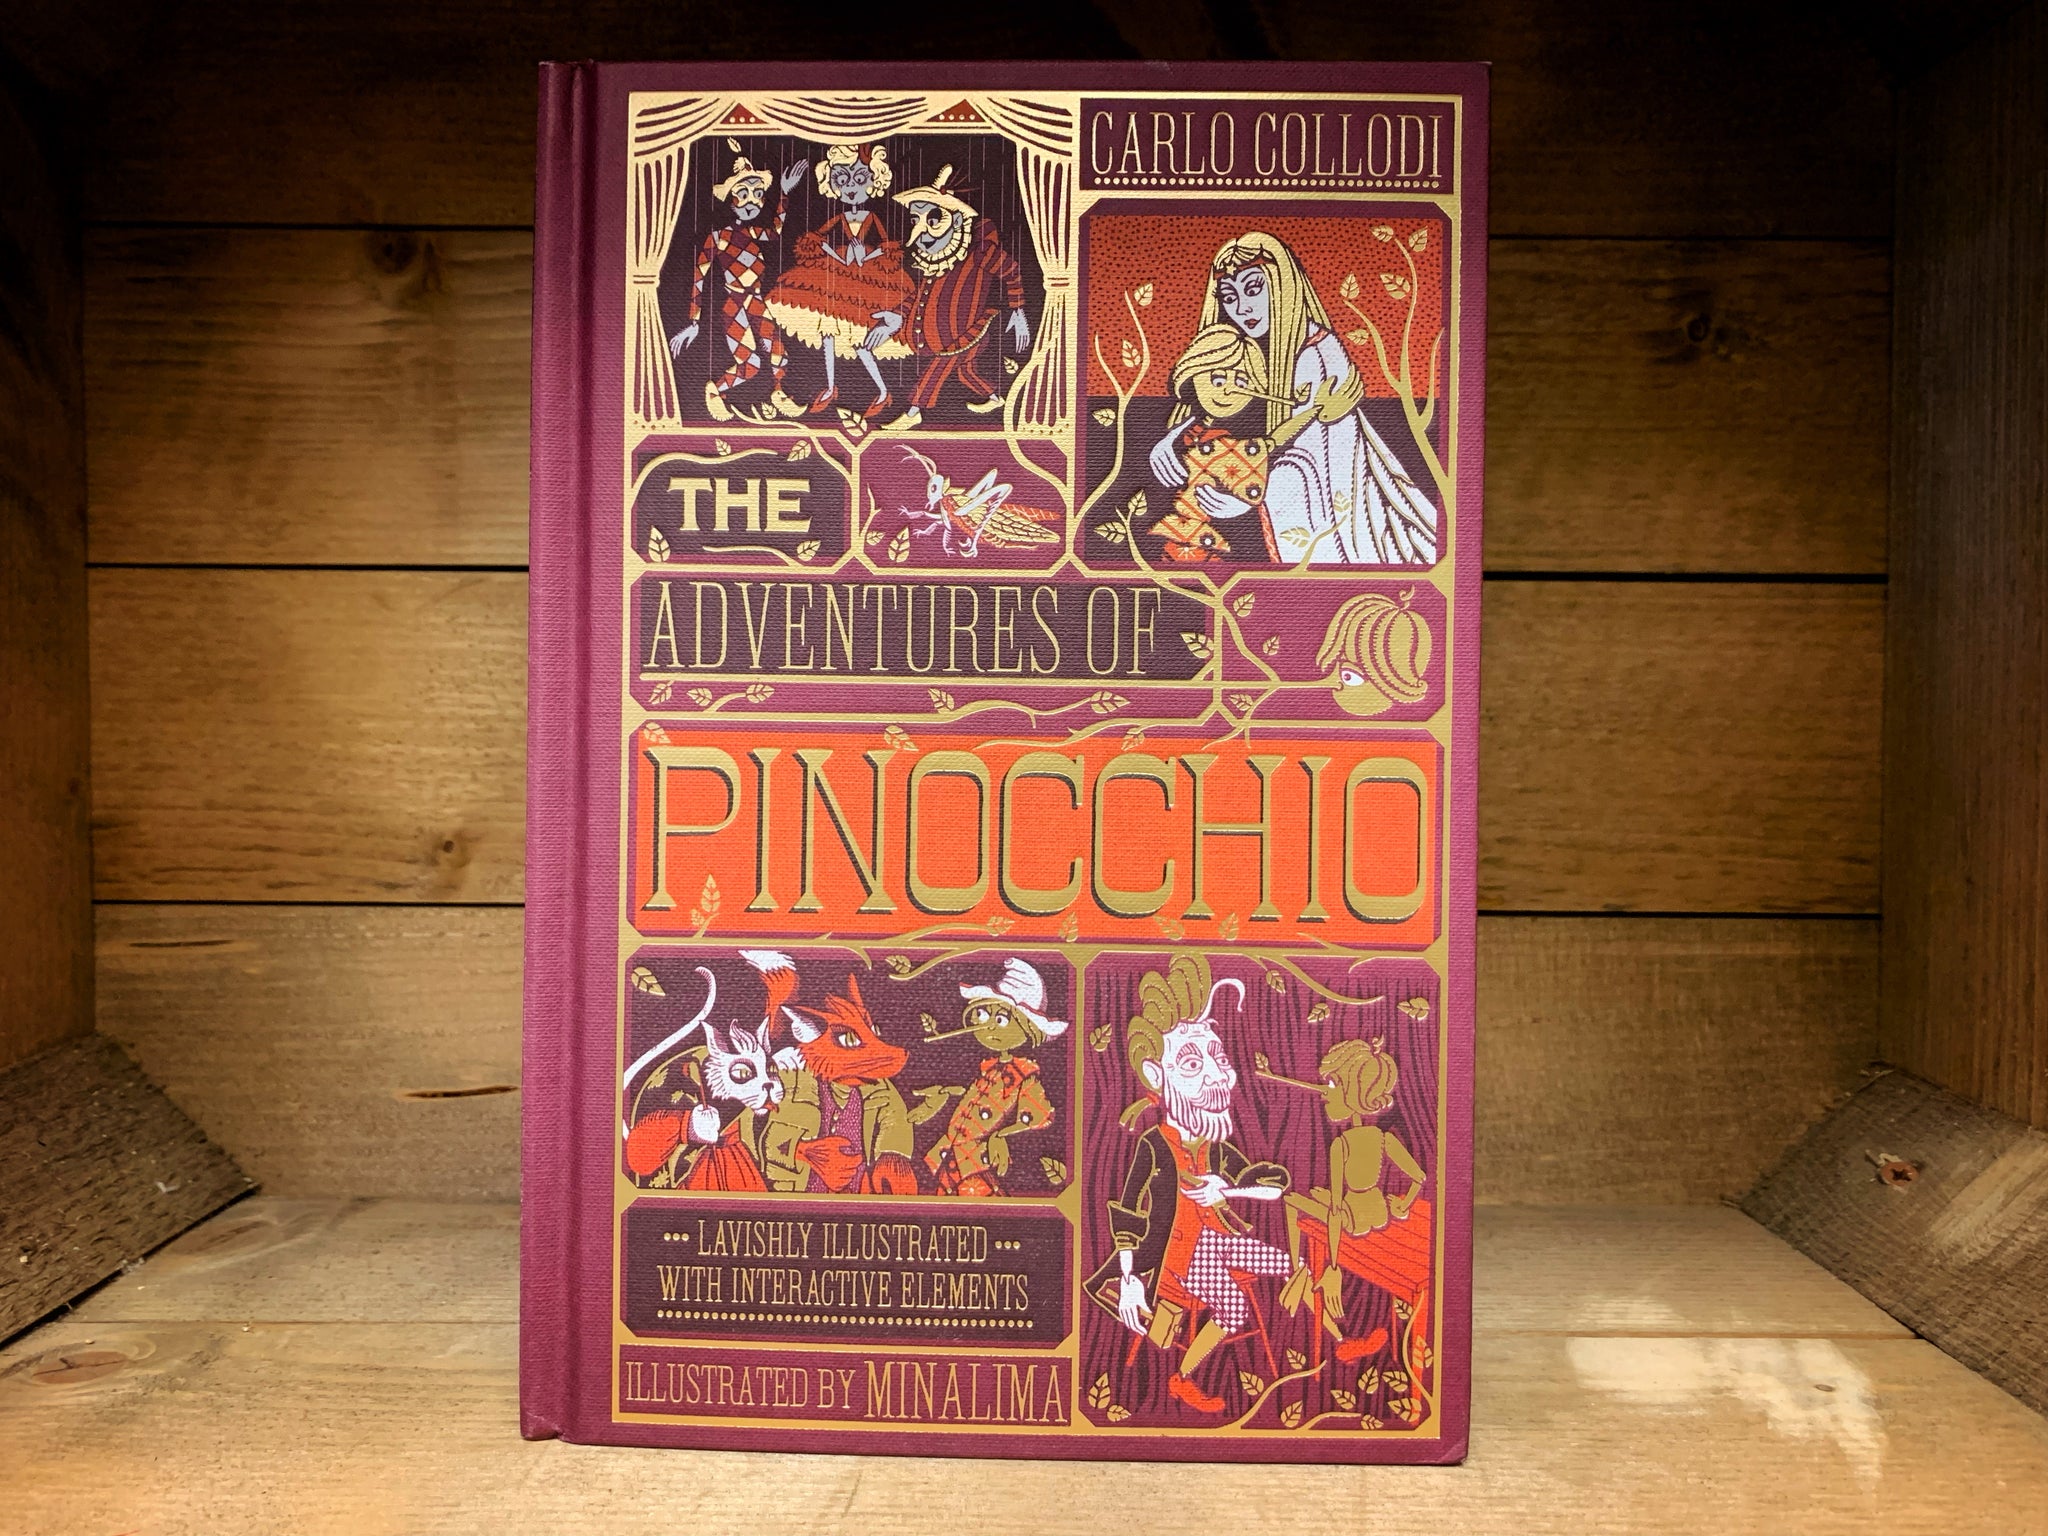 The Adventures Of Pinocchio (minalima Edition) - By Carlo Collodi